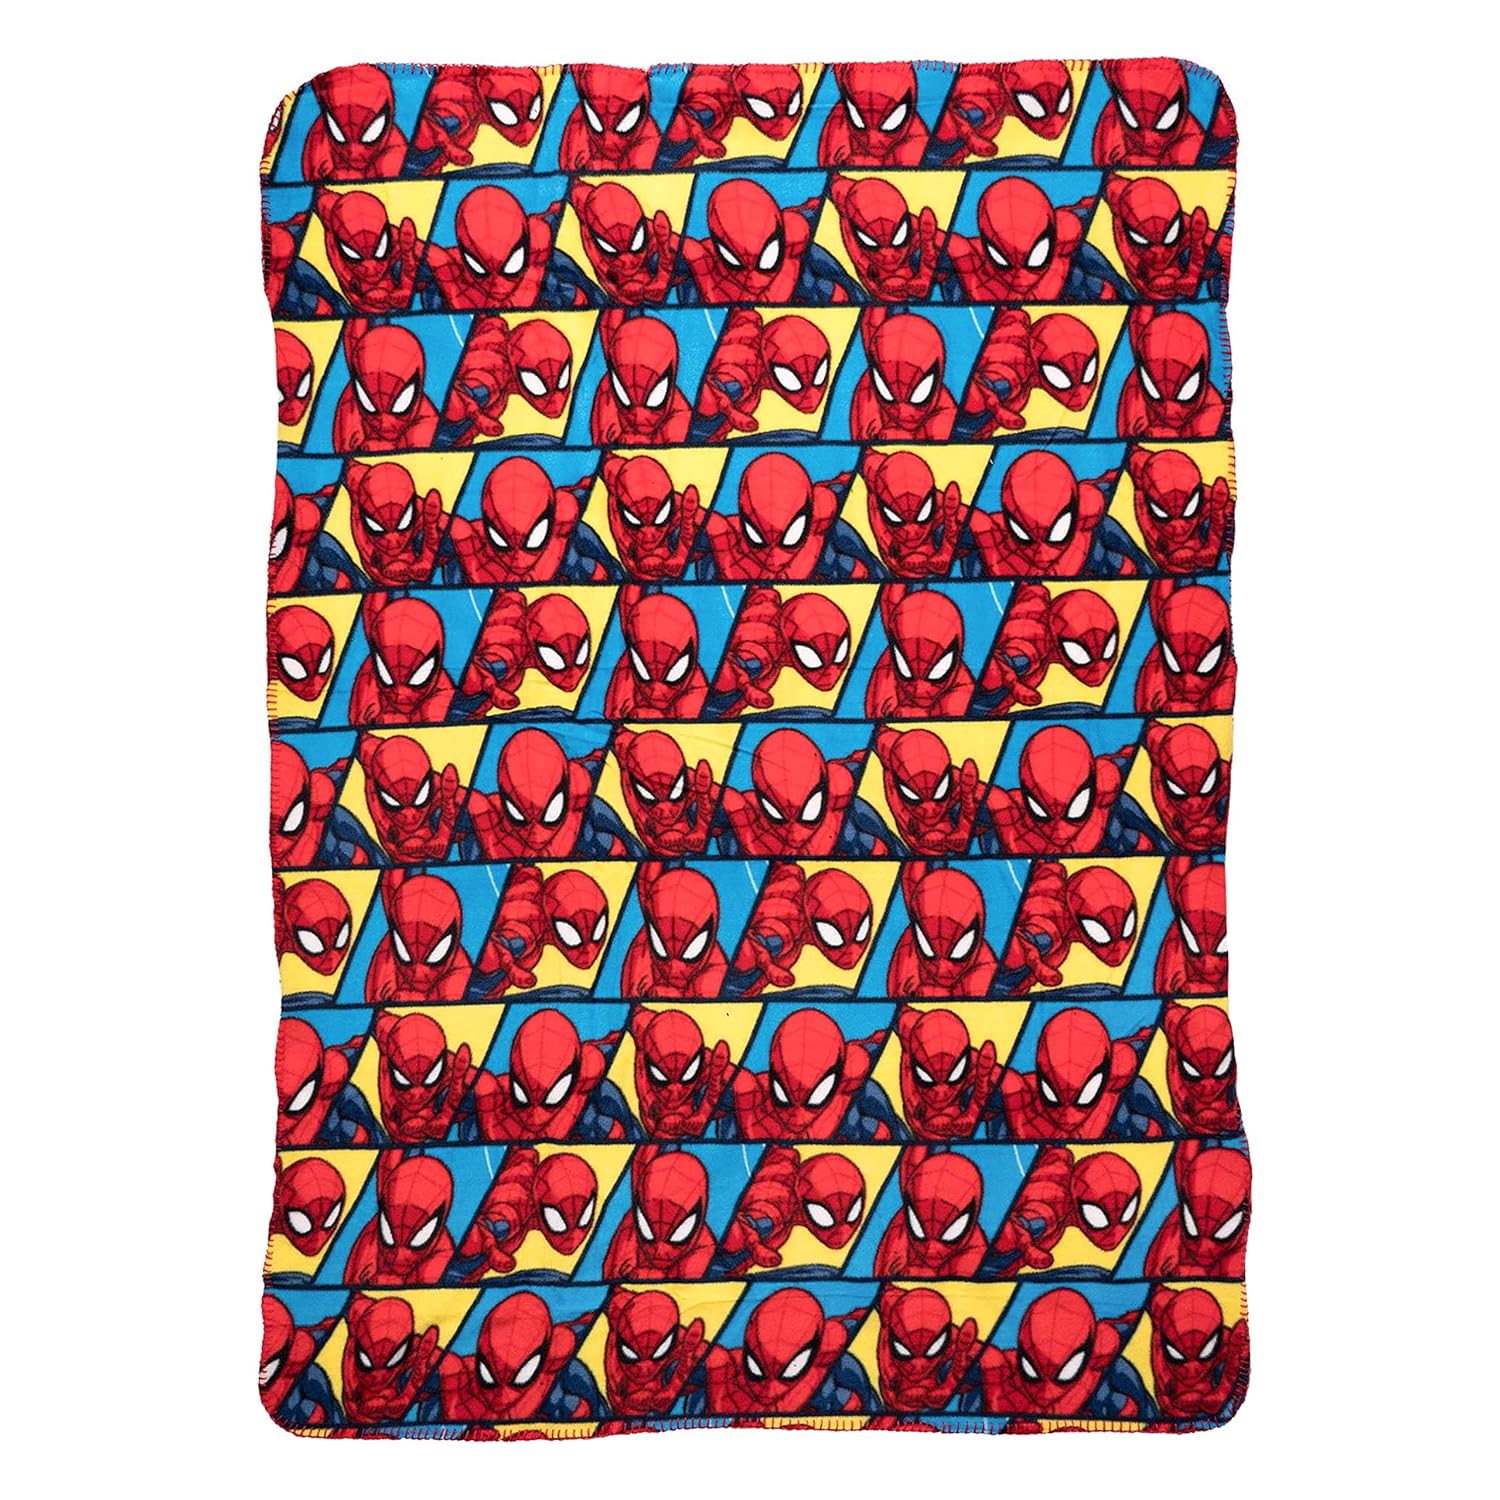 Hasbro Spiderman Fleece Throw Blanket - Fun Superhero Fleece Throw Blanket for Girls & Boys, Soft & Cozy Plush Lightweight Fabric Be…